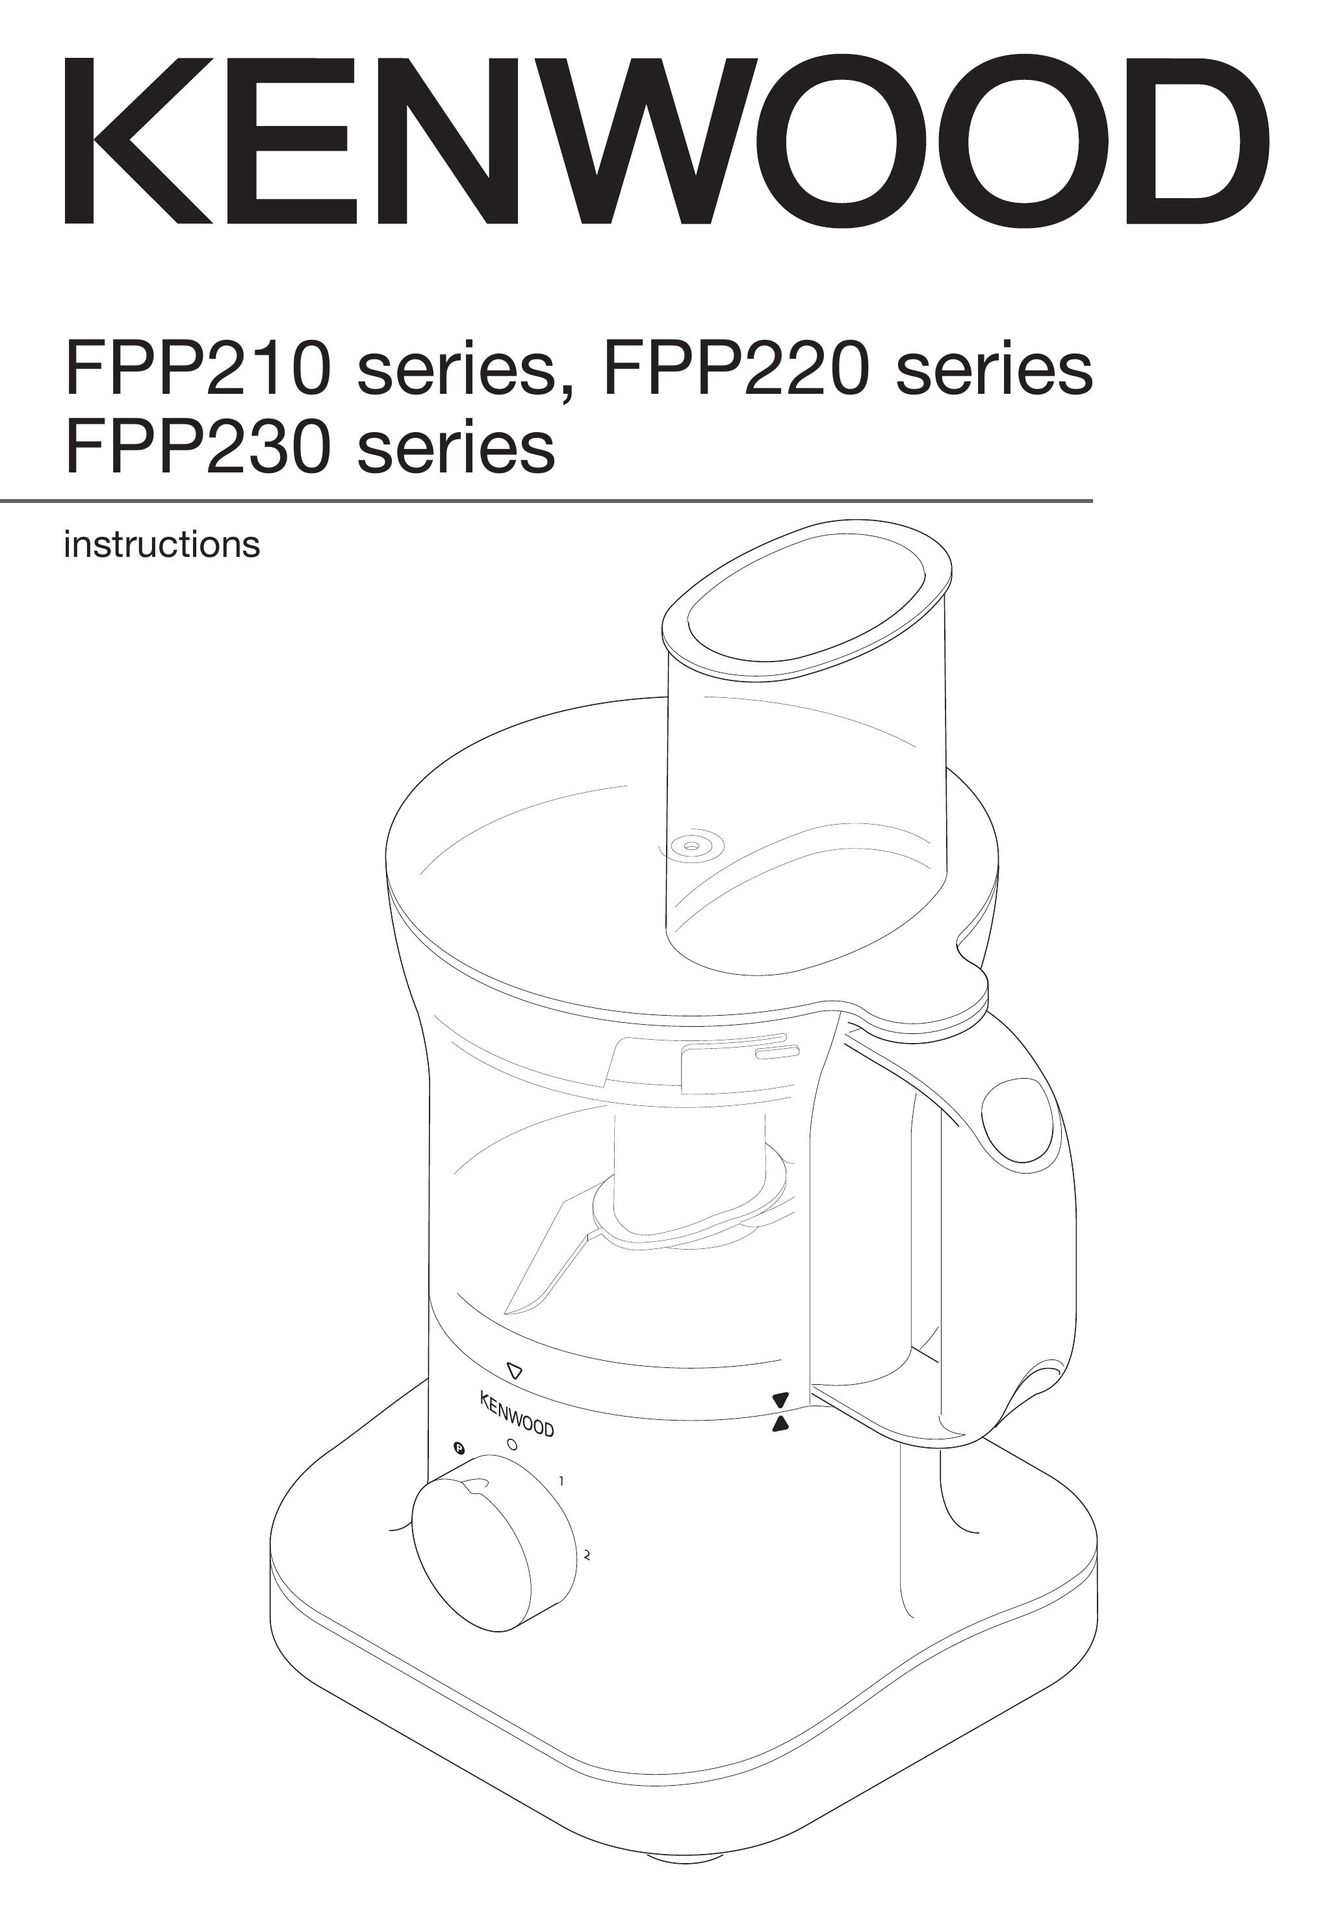 Kenwood FPP220 series Food Processor User Manual